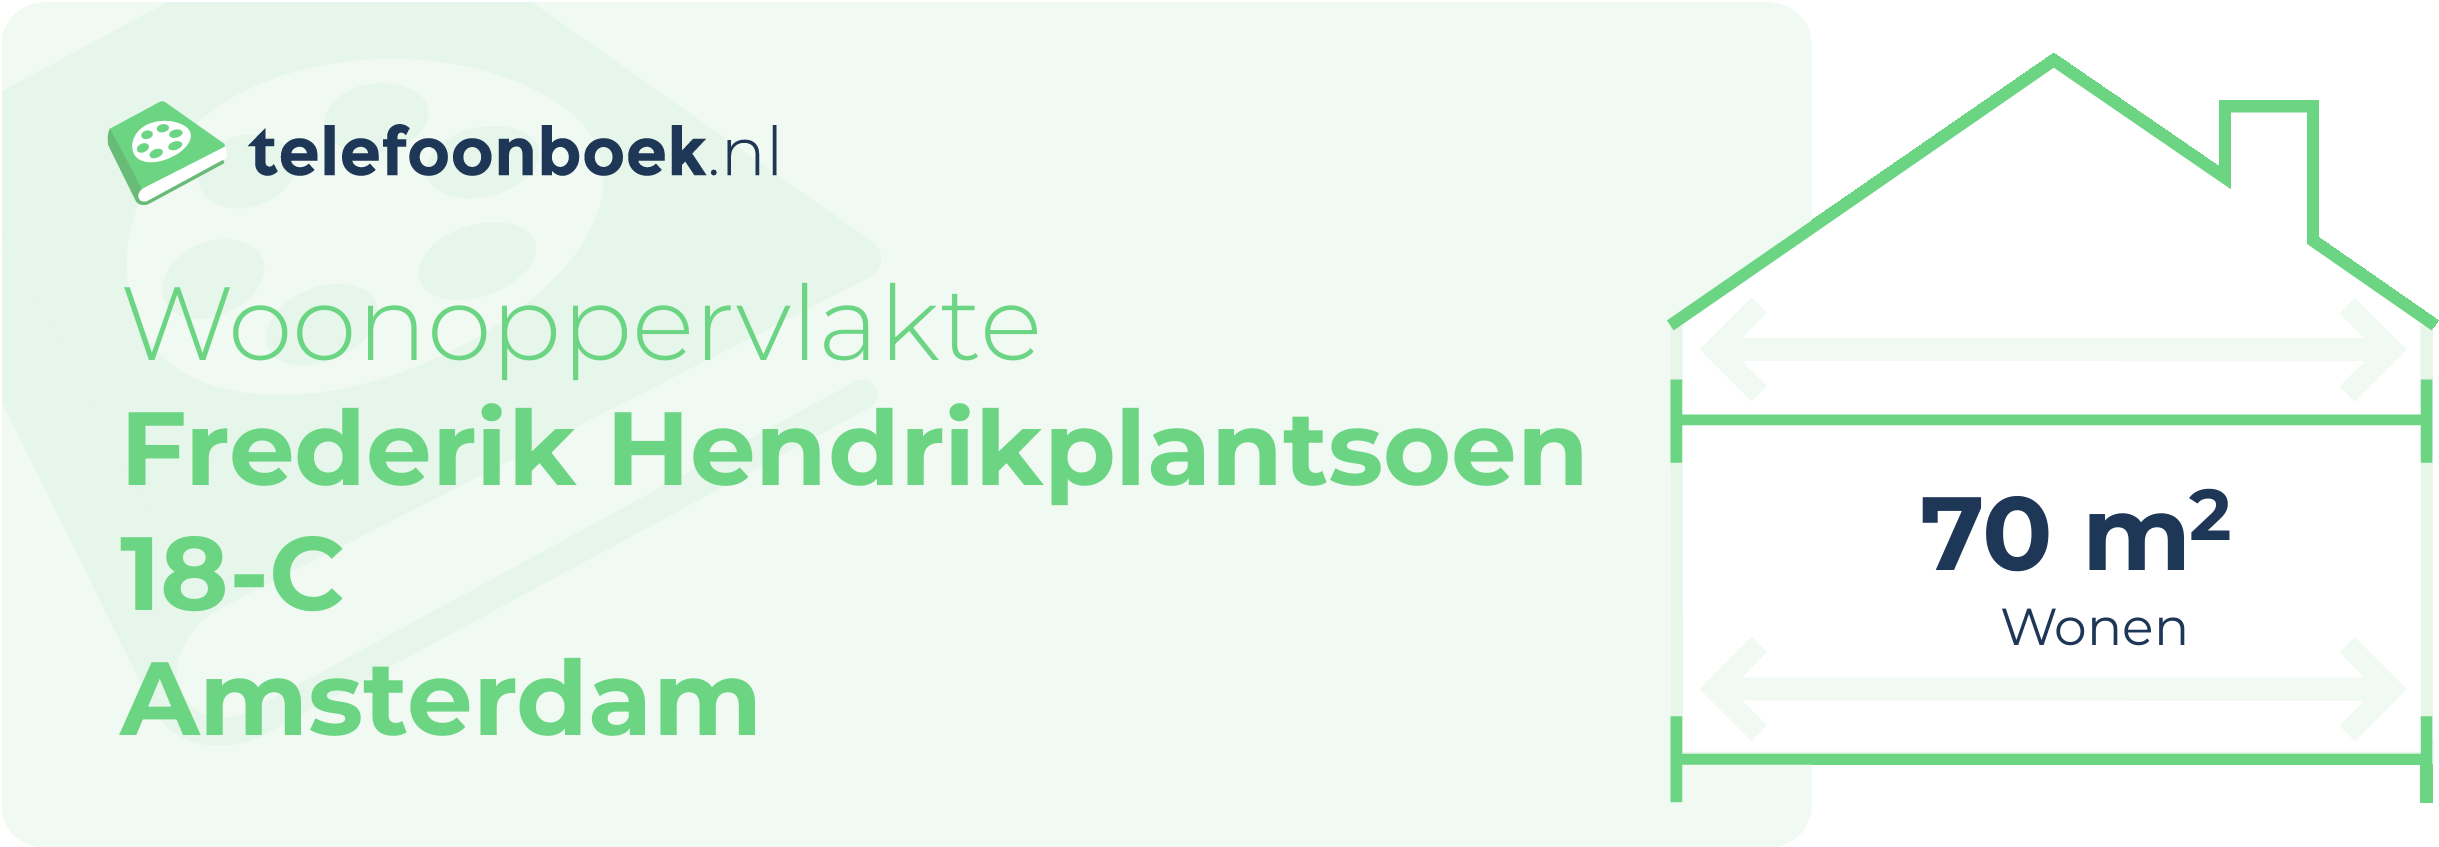 Woonoppervlakte Frederik Hendrikplantsoen 18-C Amsterdam